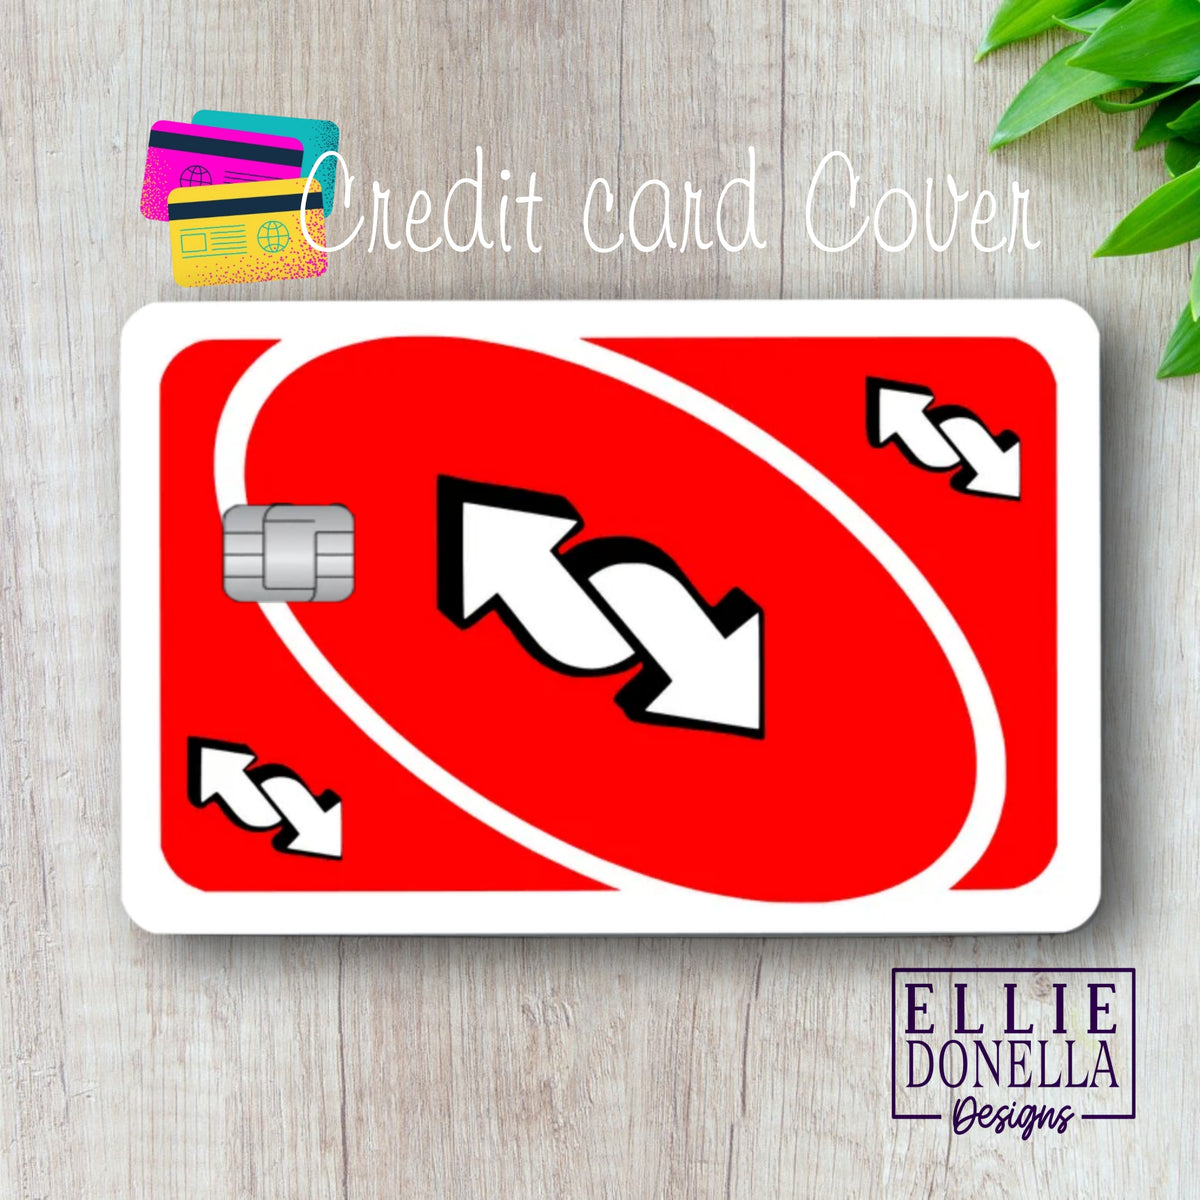 Debit Card Cover 